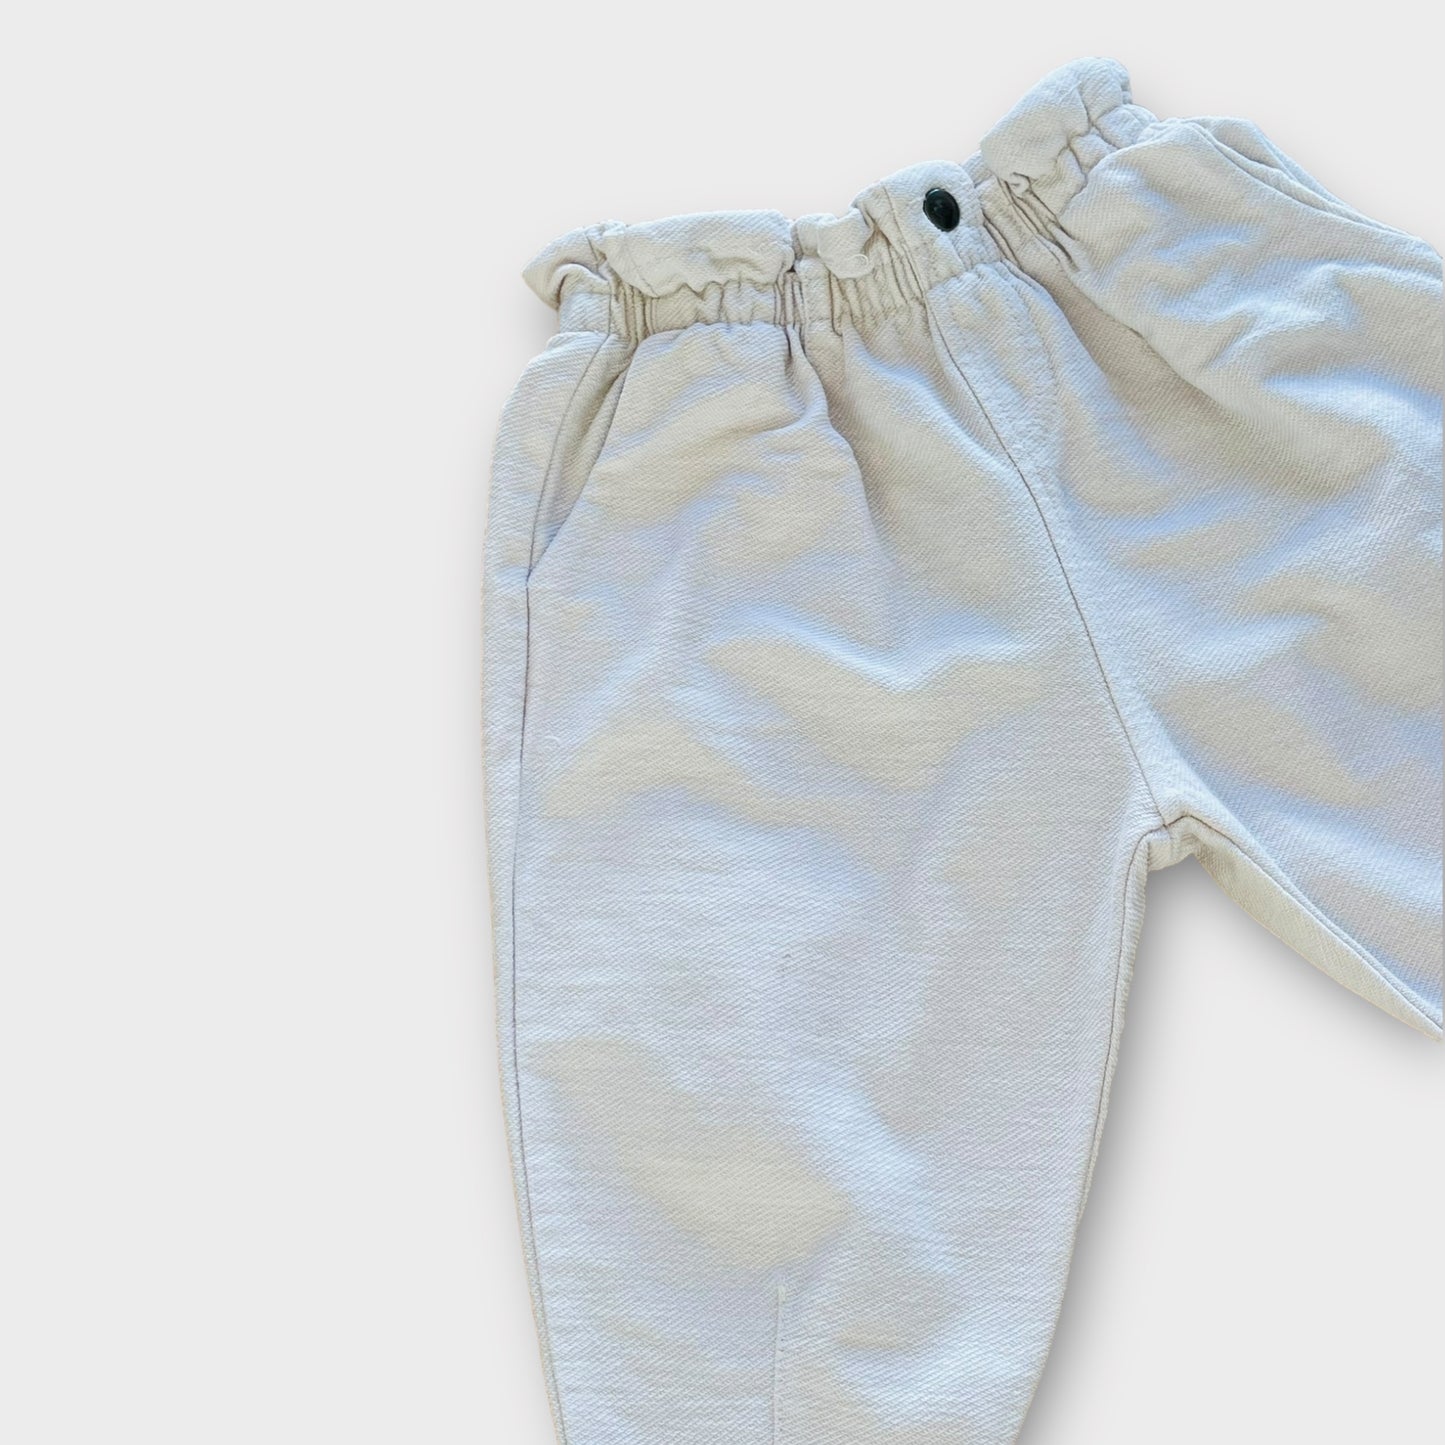 Zara - pants - 6-9 months (default)